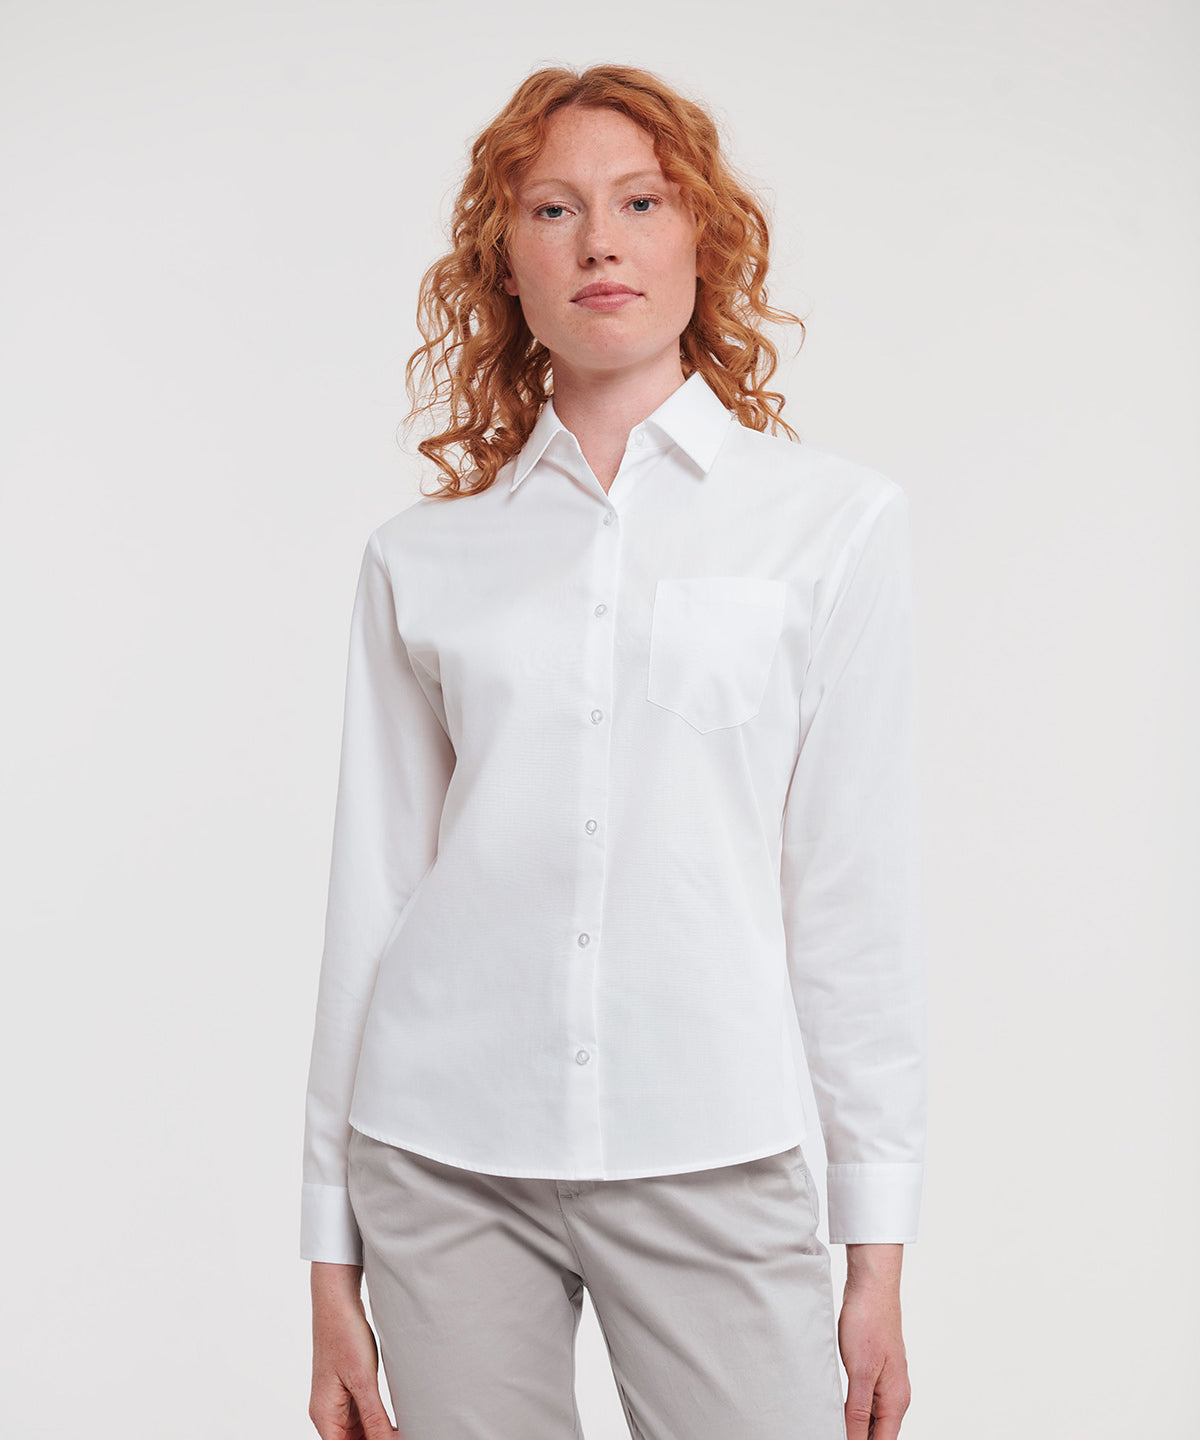 Bolir - Women's Long Sleeve 100% Cotton Poplin Shirt